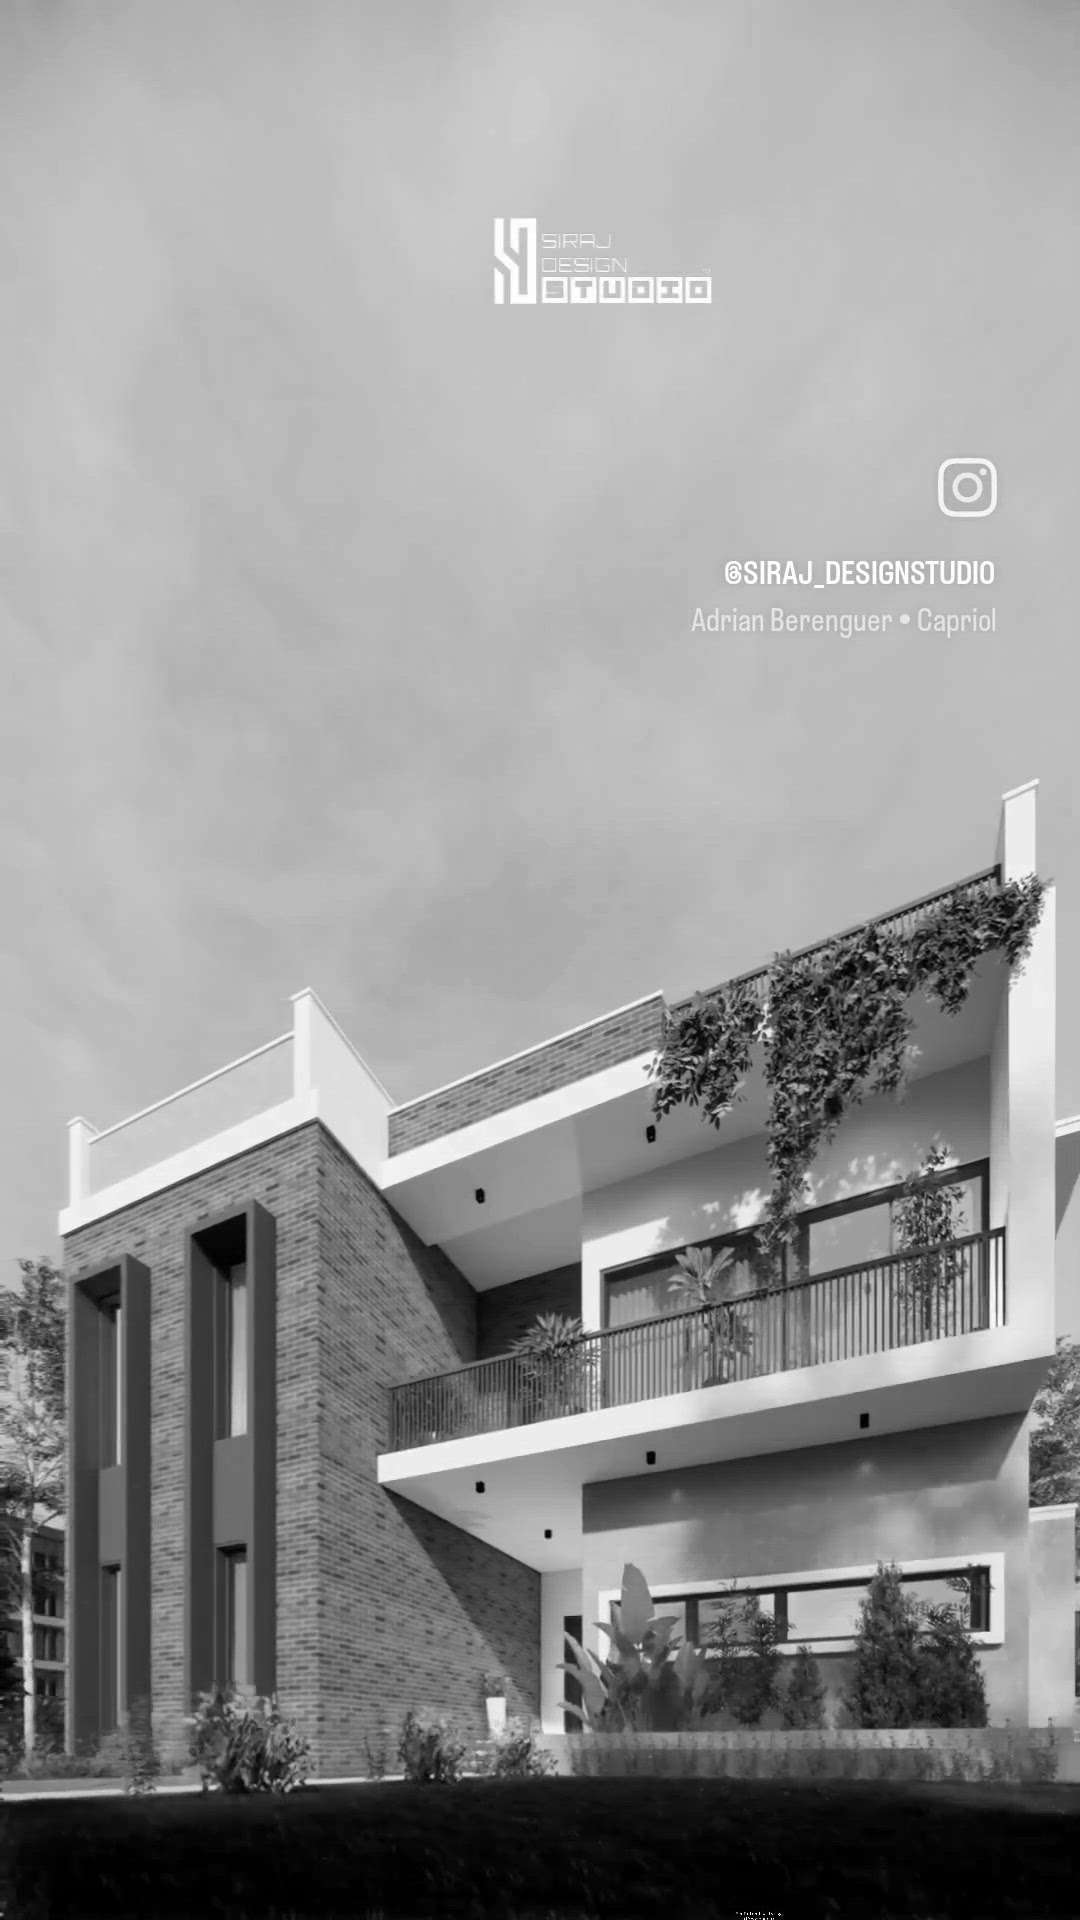 New home exterior design✨
•4BHK
•1250 SQ.FT


 #3d #KeralaStyleHouse #Architect #CivilEngineer #HouseConstruction #moderndesgin #trendingdesign #elegant #Minimalistic #keralaplanners #koloviral #videowalkthrough #renderlovers #sirajdesignstudio